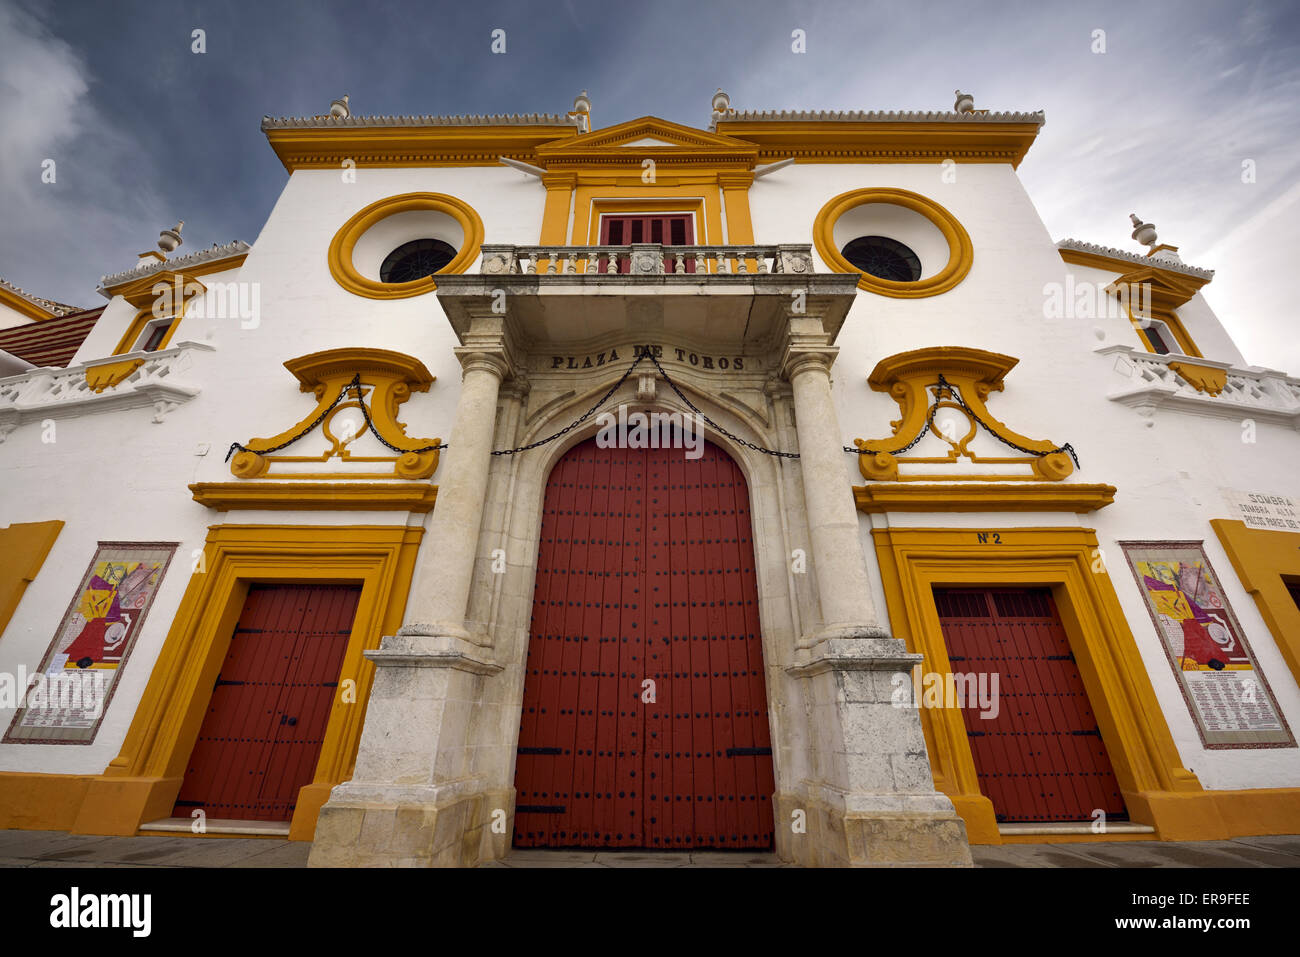 Haustüren und barocke Fassade von der Plaza de Toros Stierkampf ring in Sevilla Spanien Stockfoto